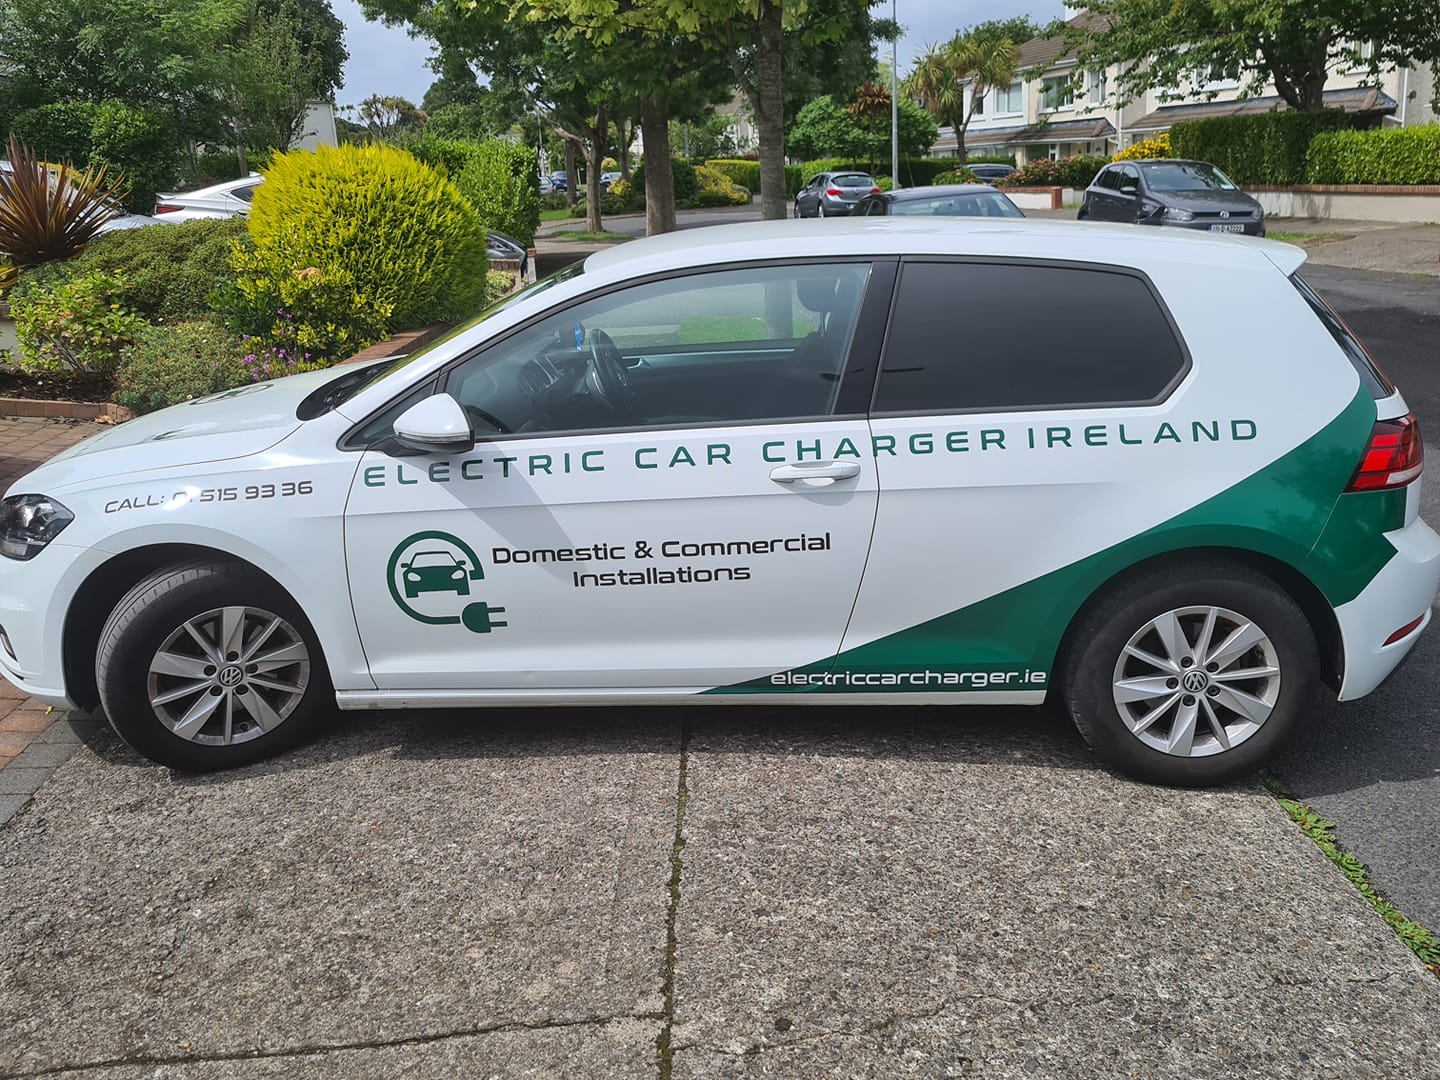 Electric Car Charger Ireland survey car